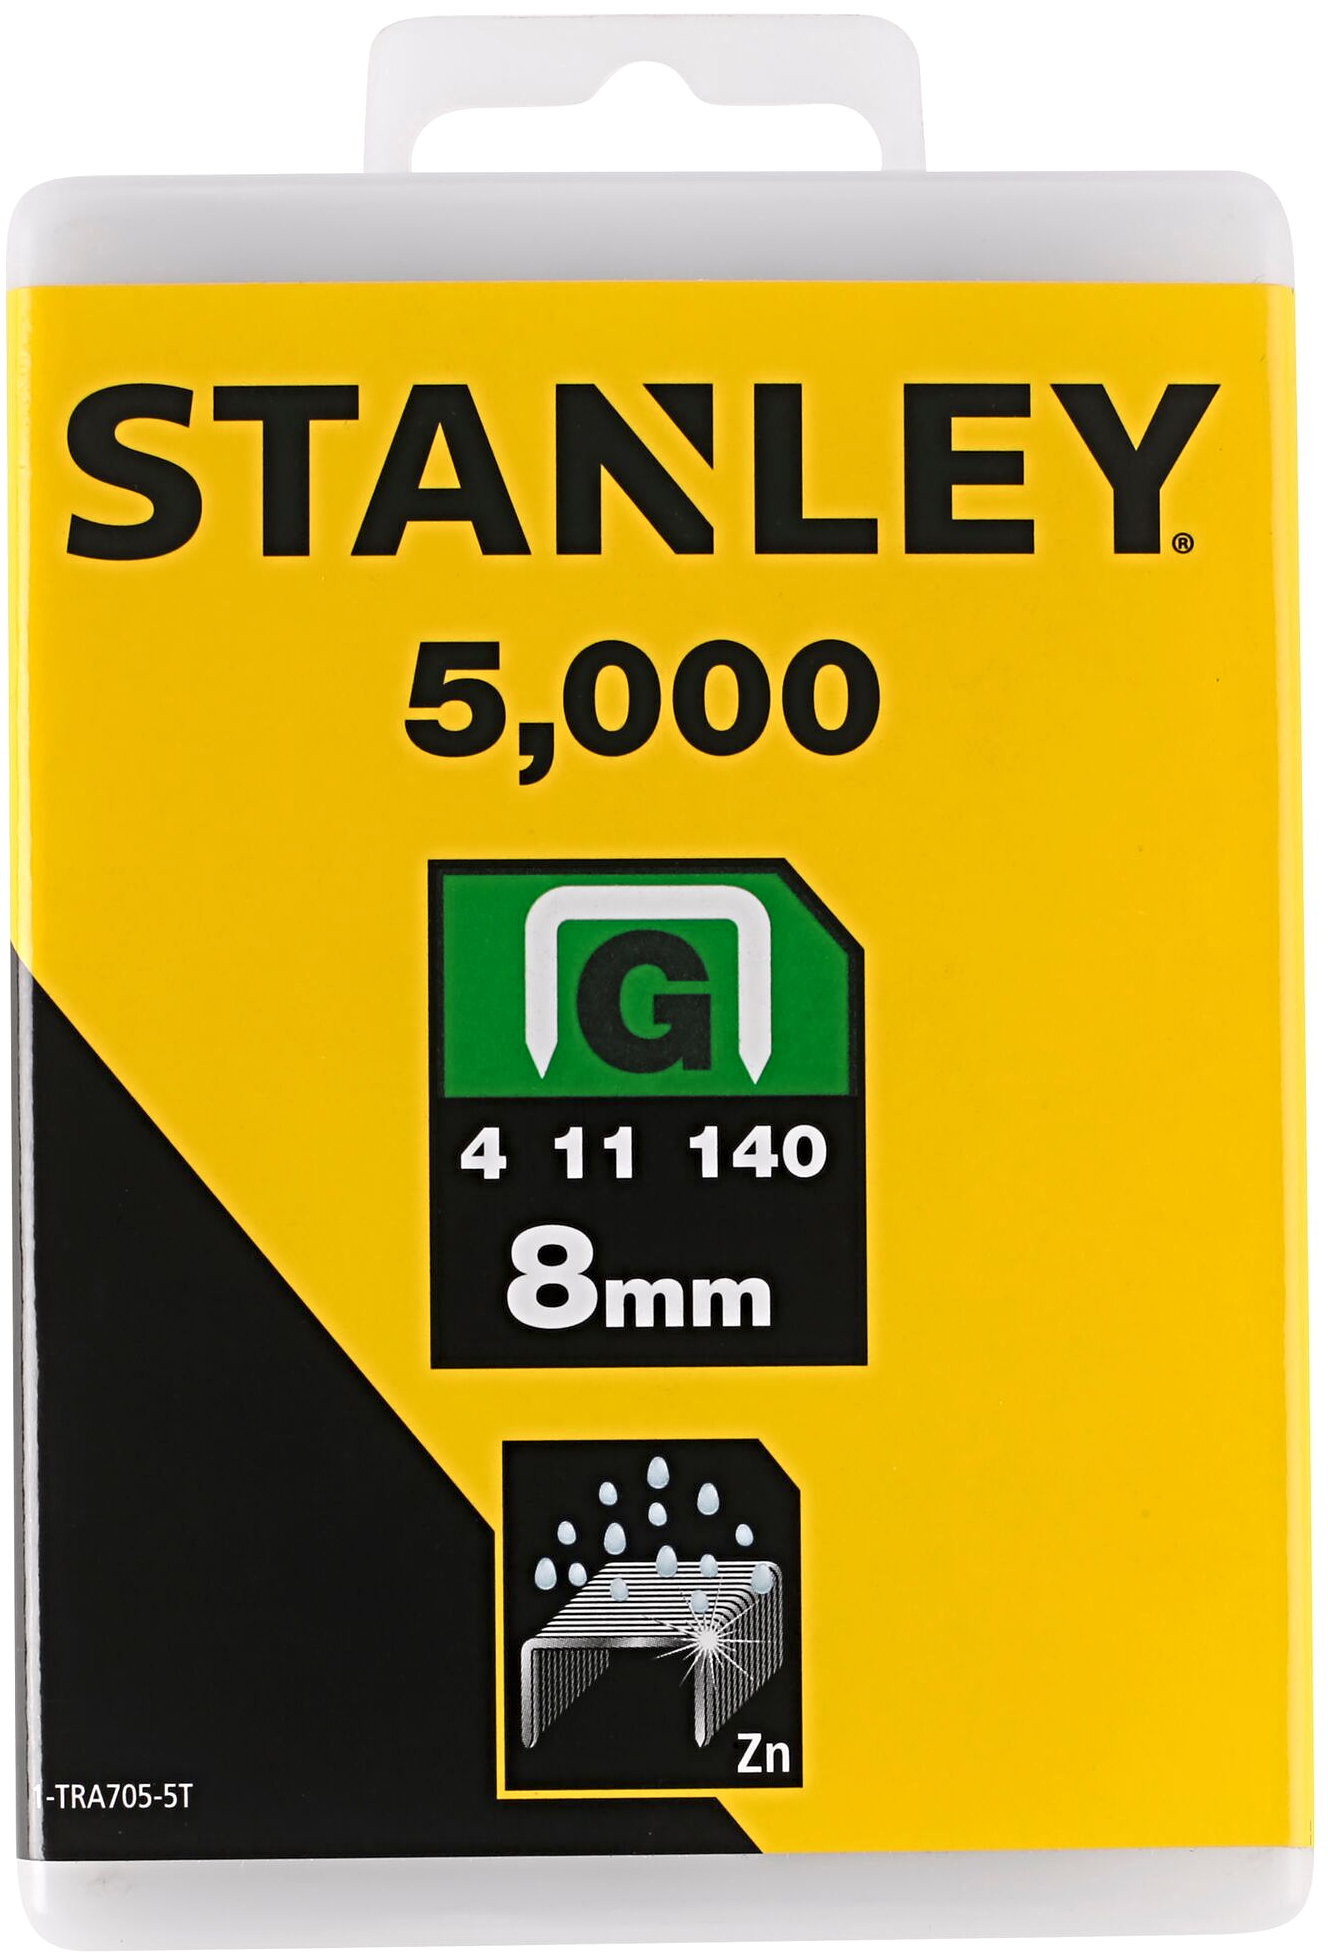 STANLEY 1-TRA705-5T spony HD typ G - 10,6 mm, délka 8 mm, 5000 ks